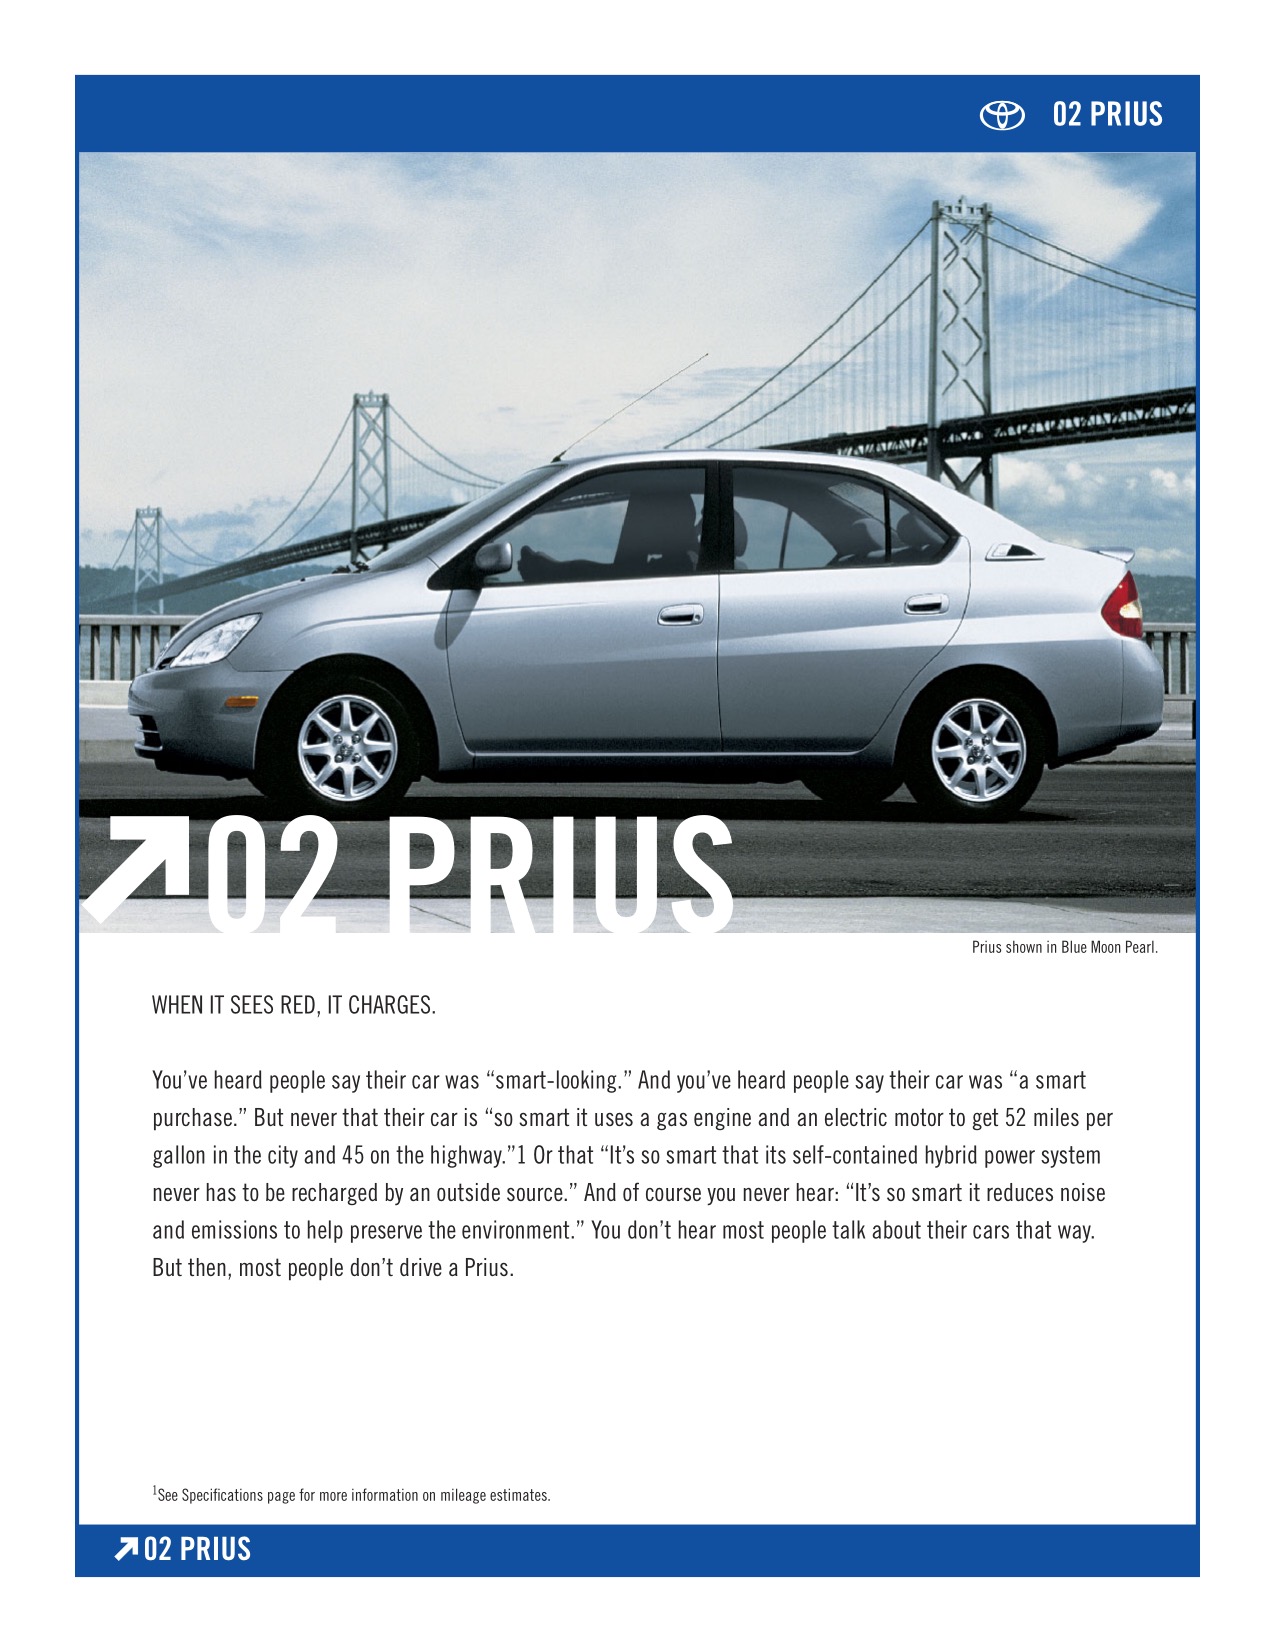 2002 Toyota Prius Brochure